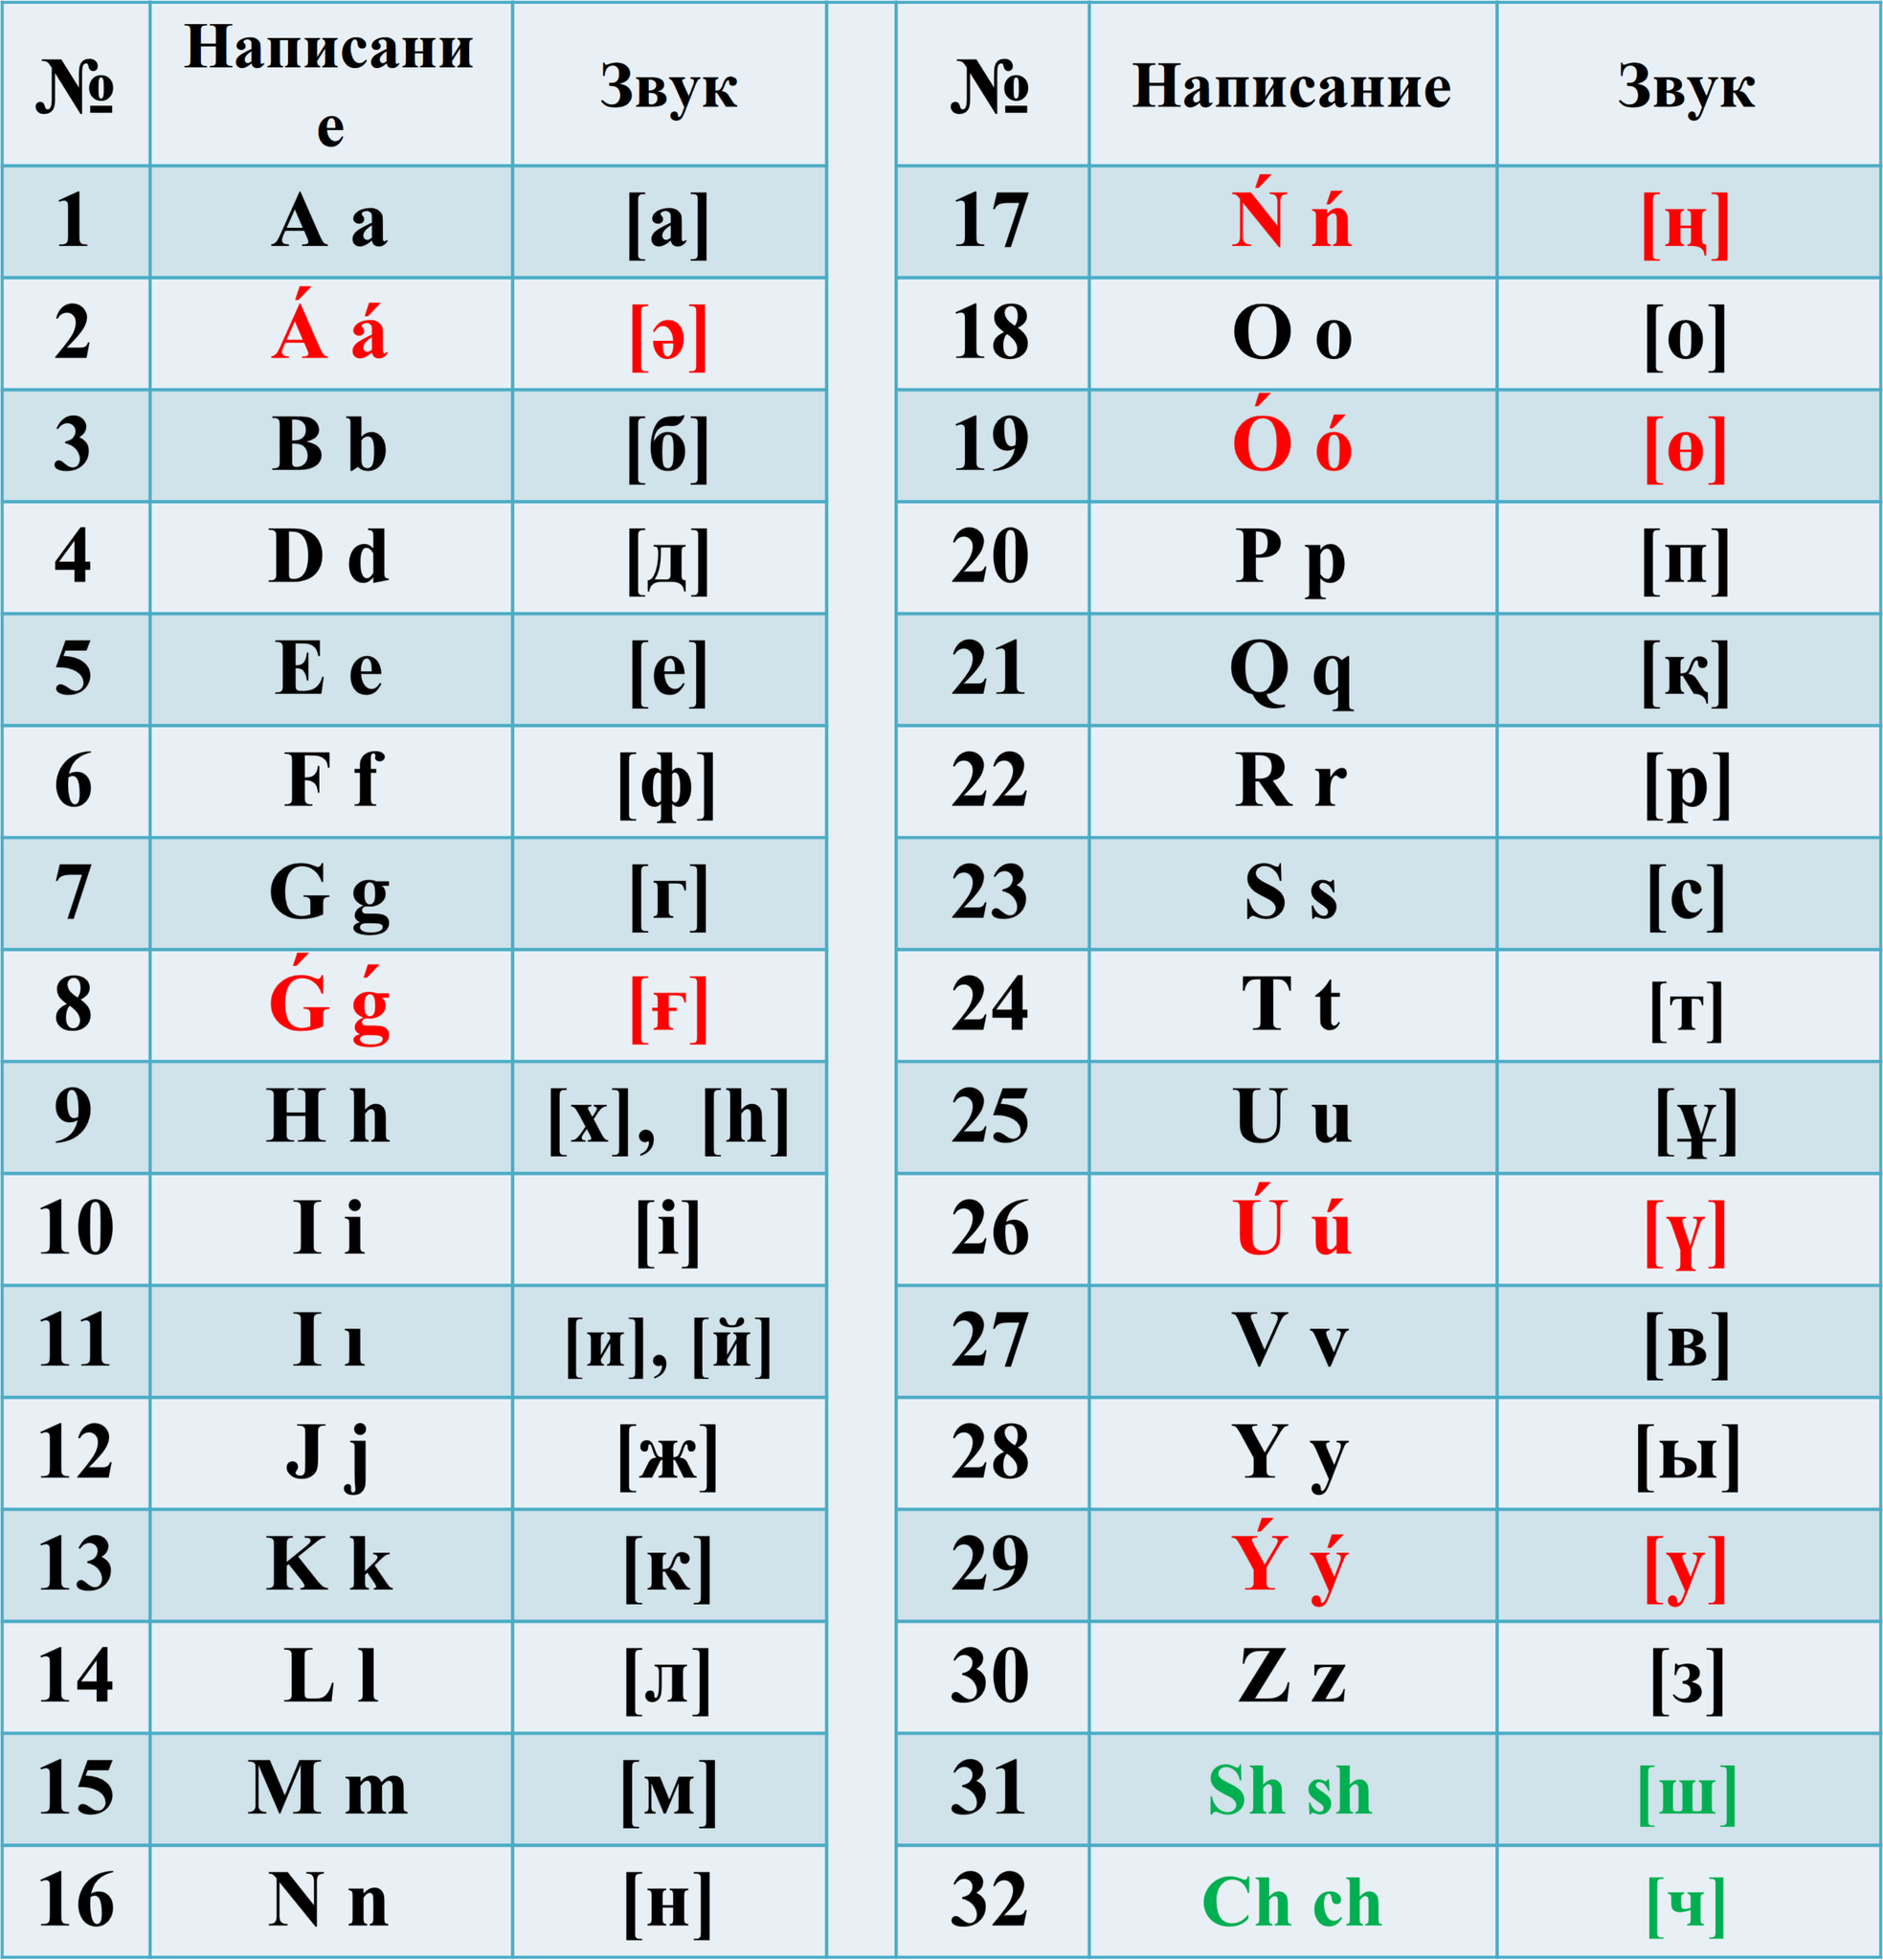 File 18 Kazakh Latin Alphabet Png Wikimedia Commons